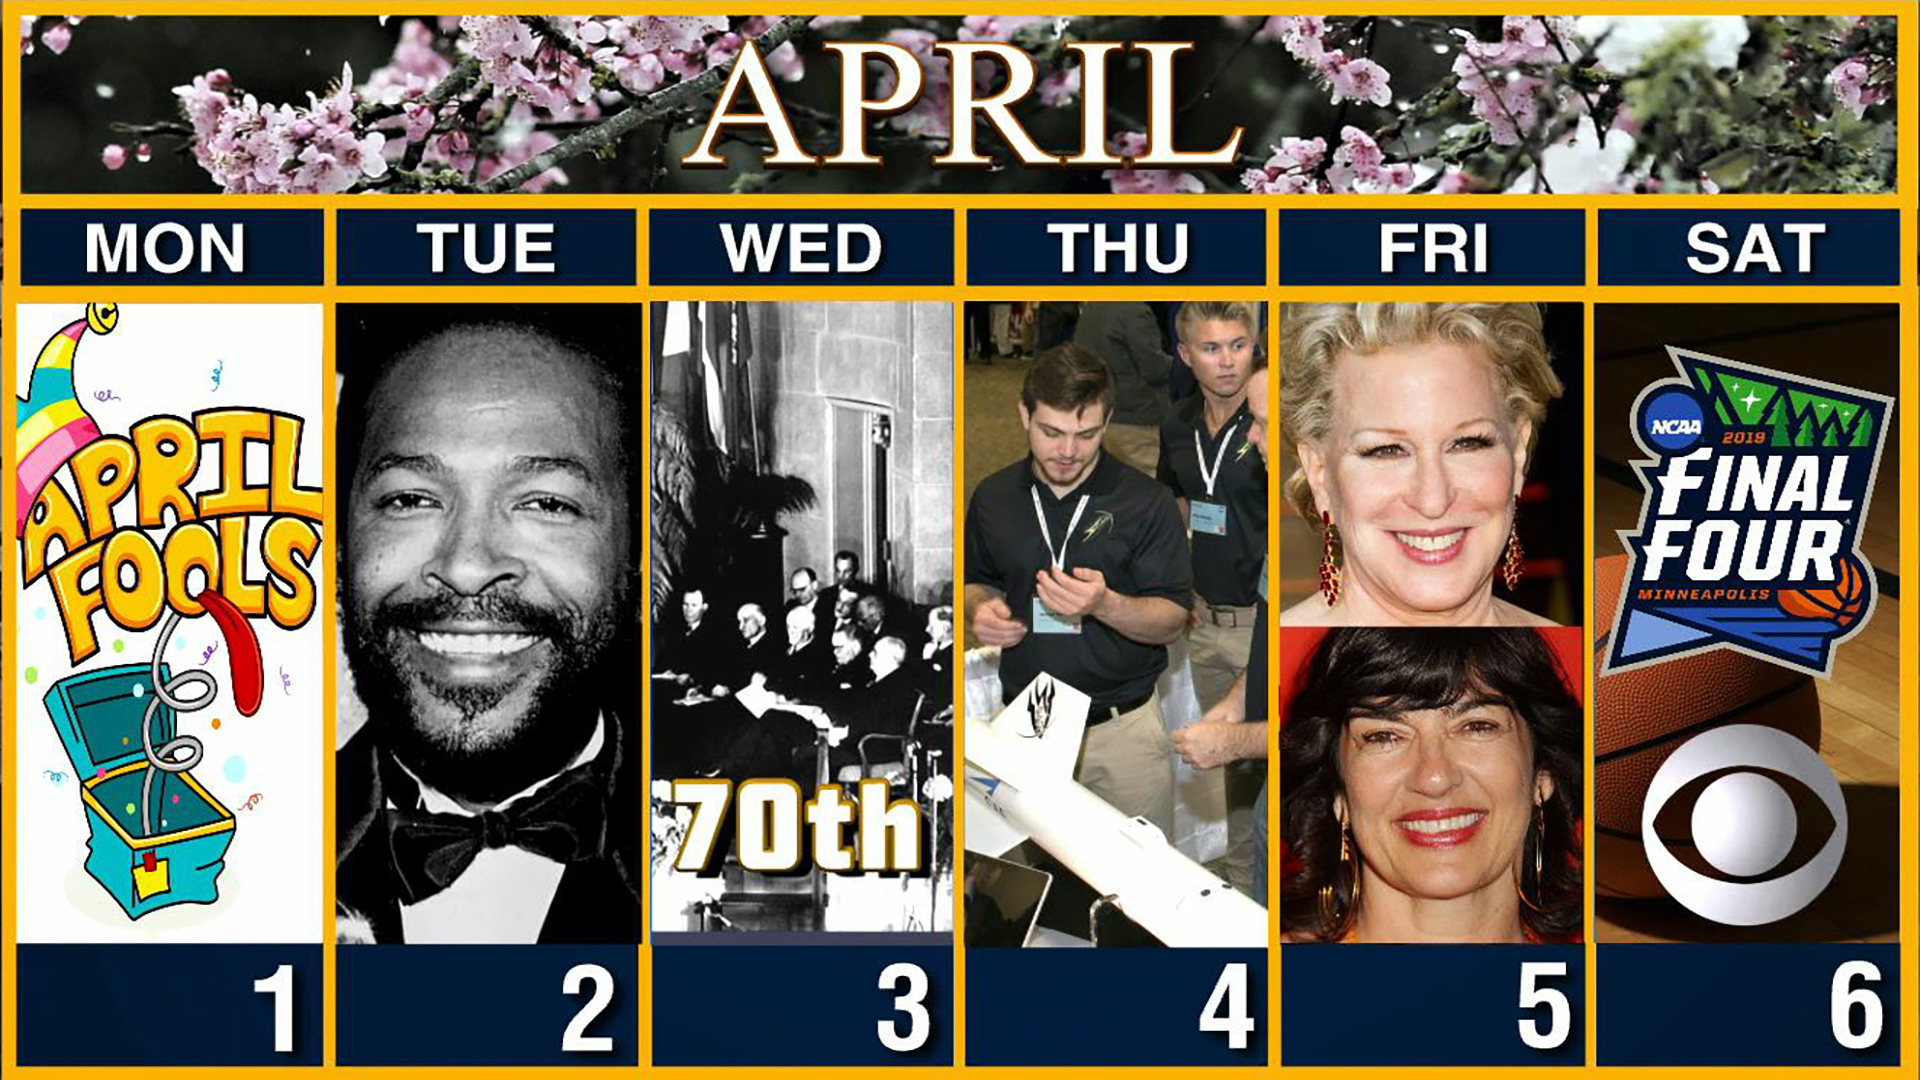 Watch Sunday Morning Calendar Week of April 1 Full show on CBS